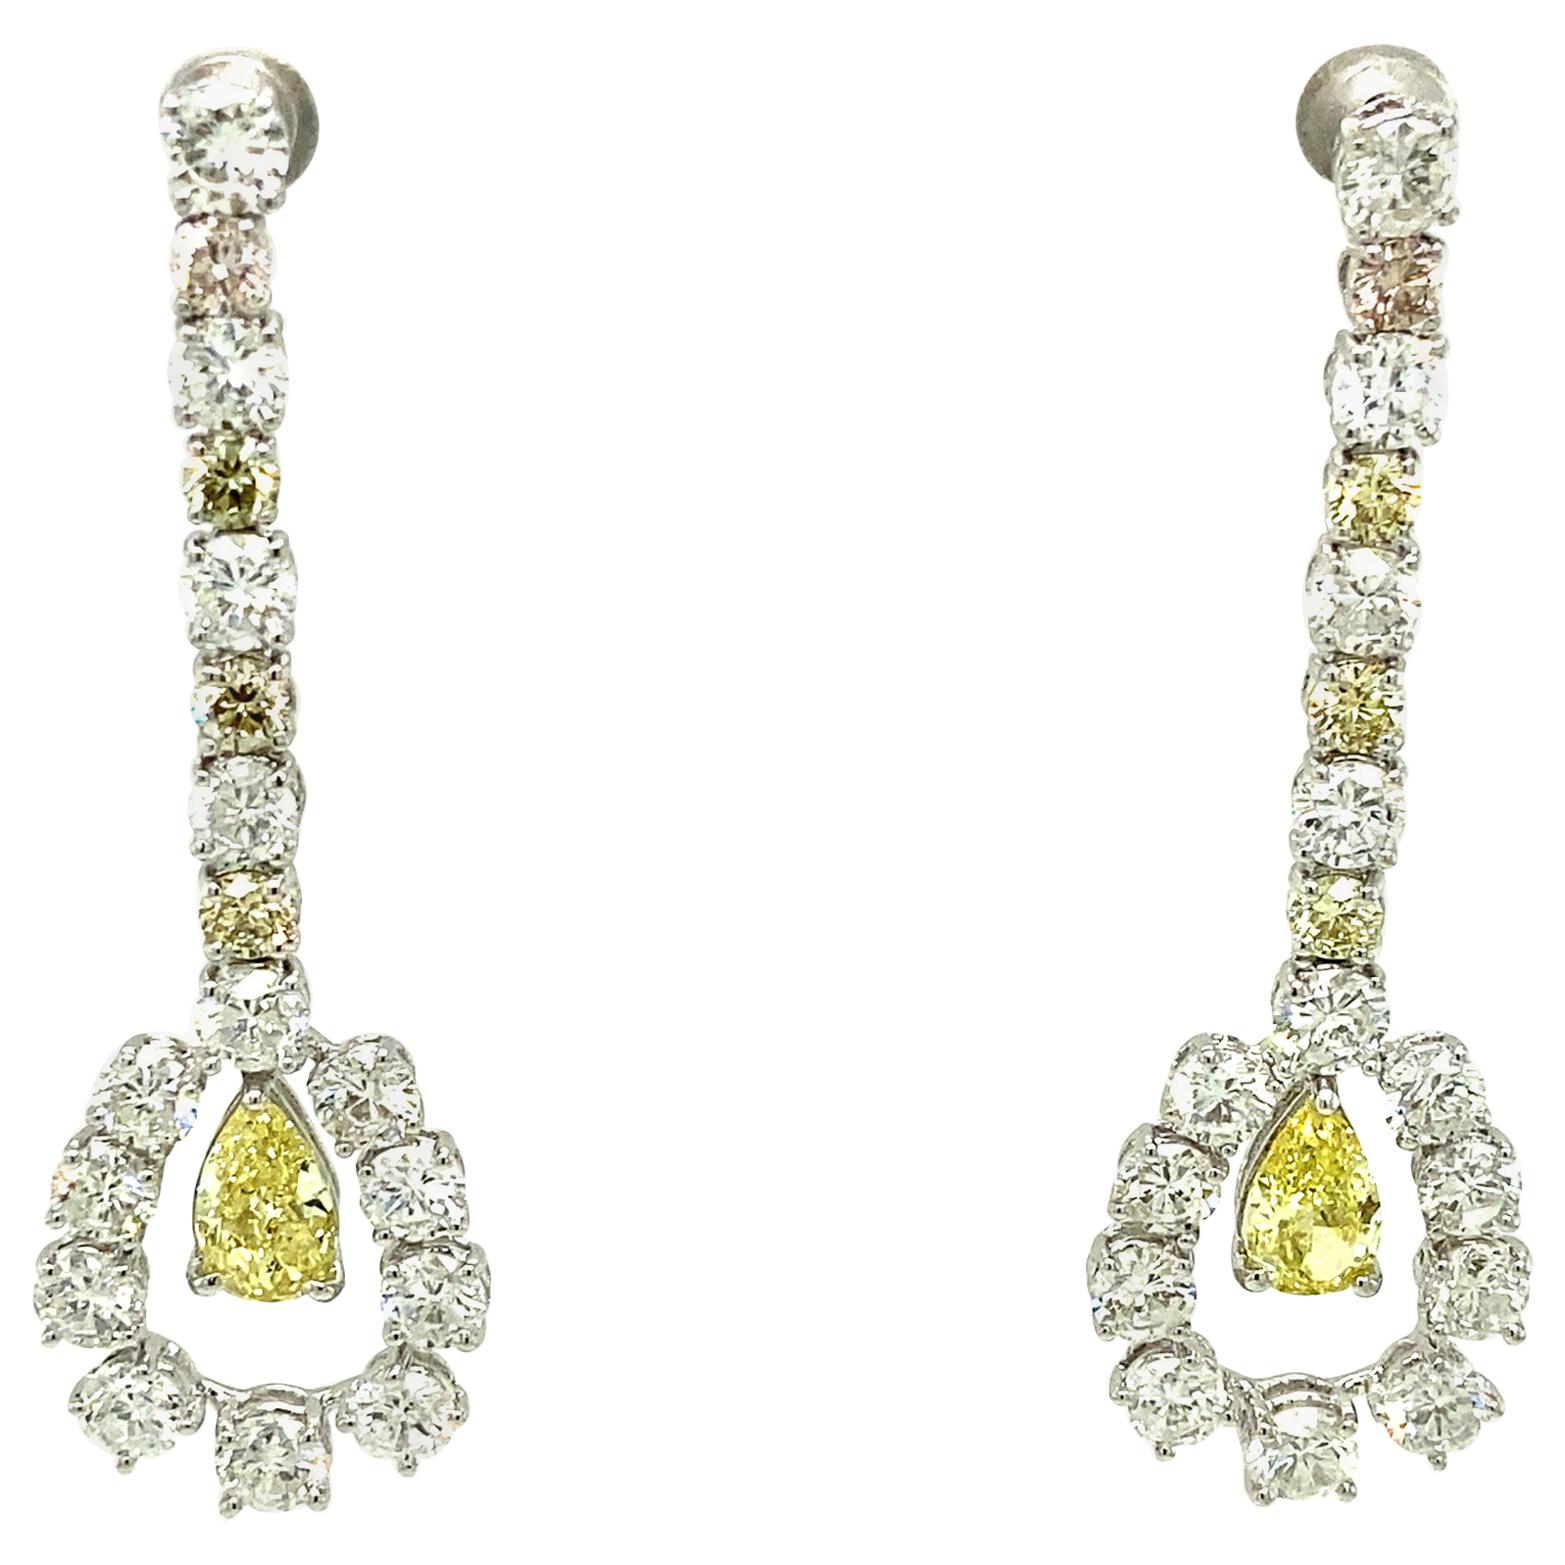 1.43 Carat GIA Certified Fancy Intense Yellow Diamonds and Diamond Gold Earrings